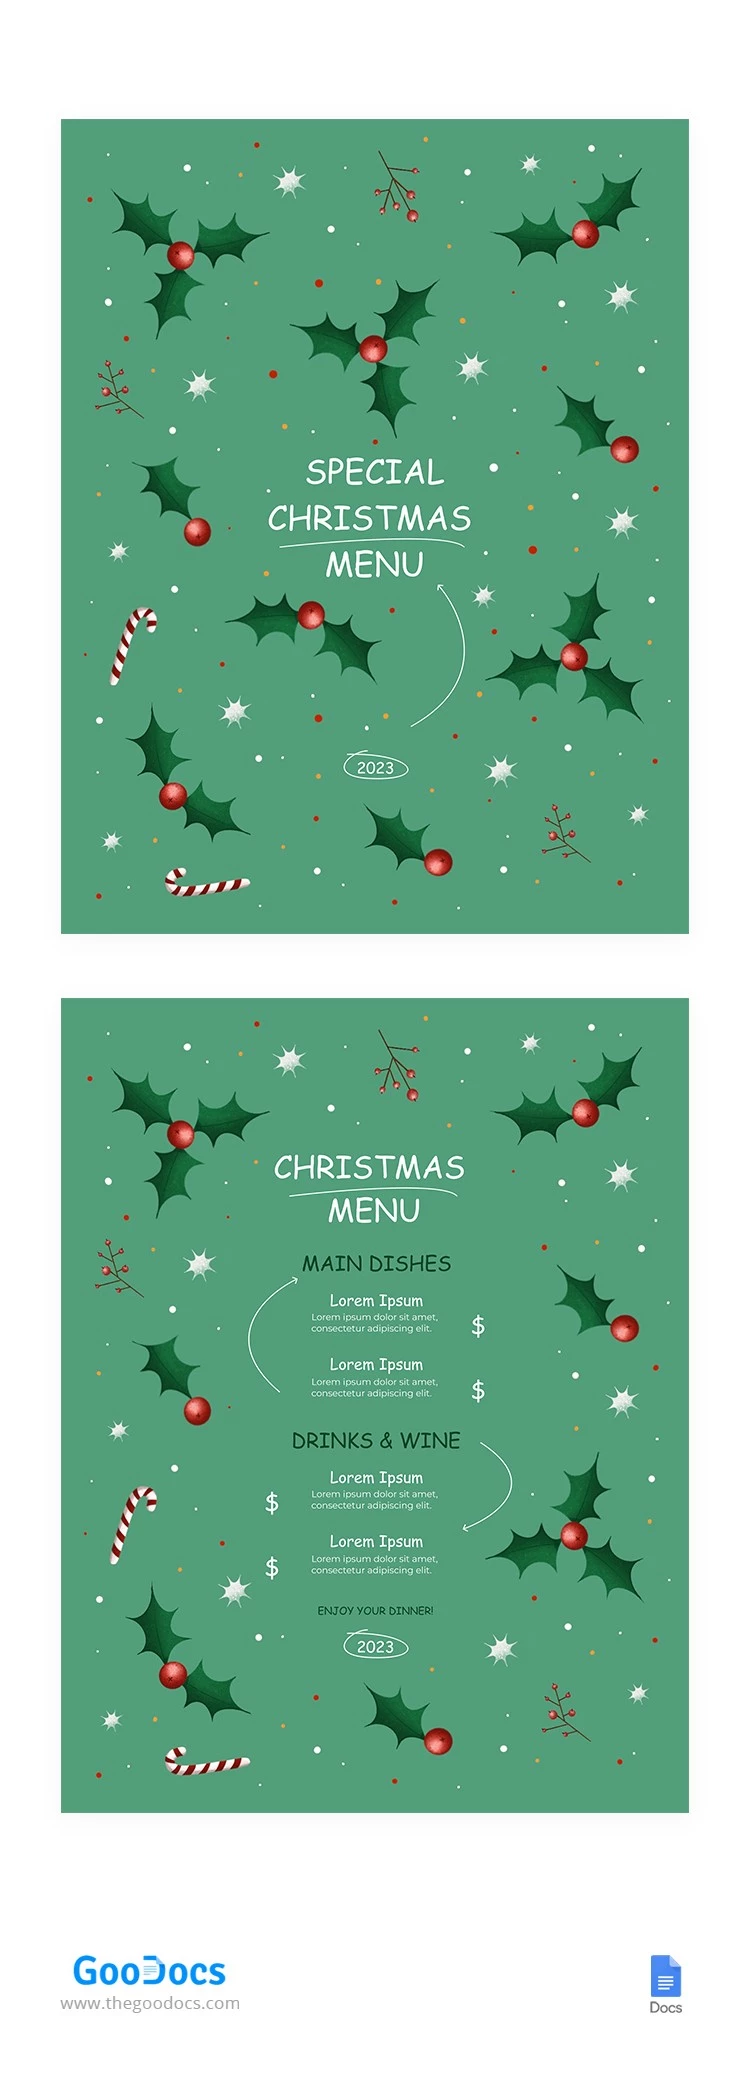 Menú de Navidad ilustrado - free Google Docs Template - 10065002